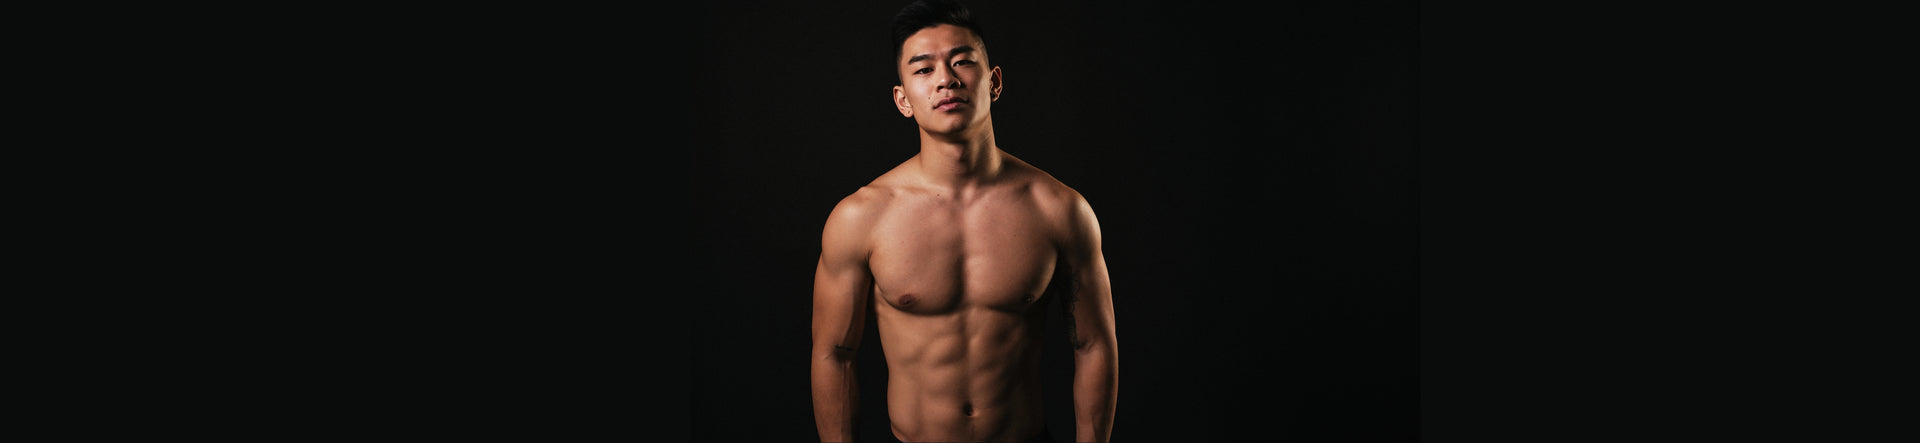 Full Bodies | Males | Asian